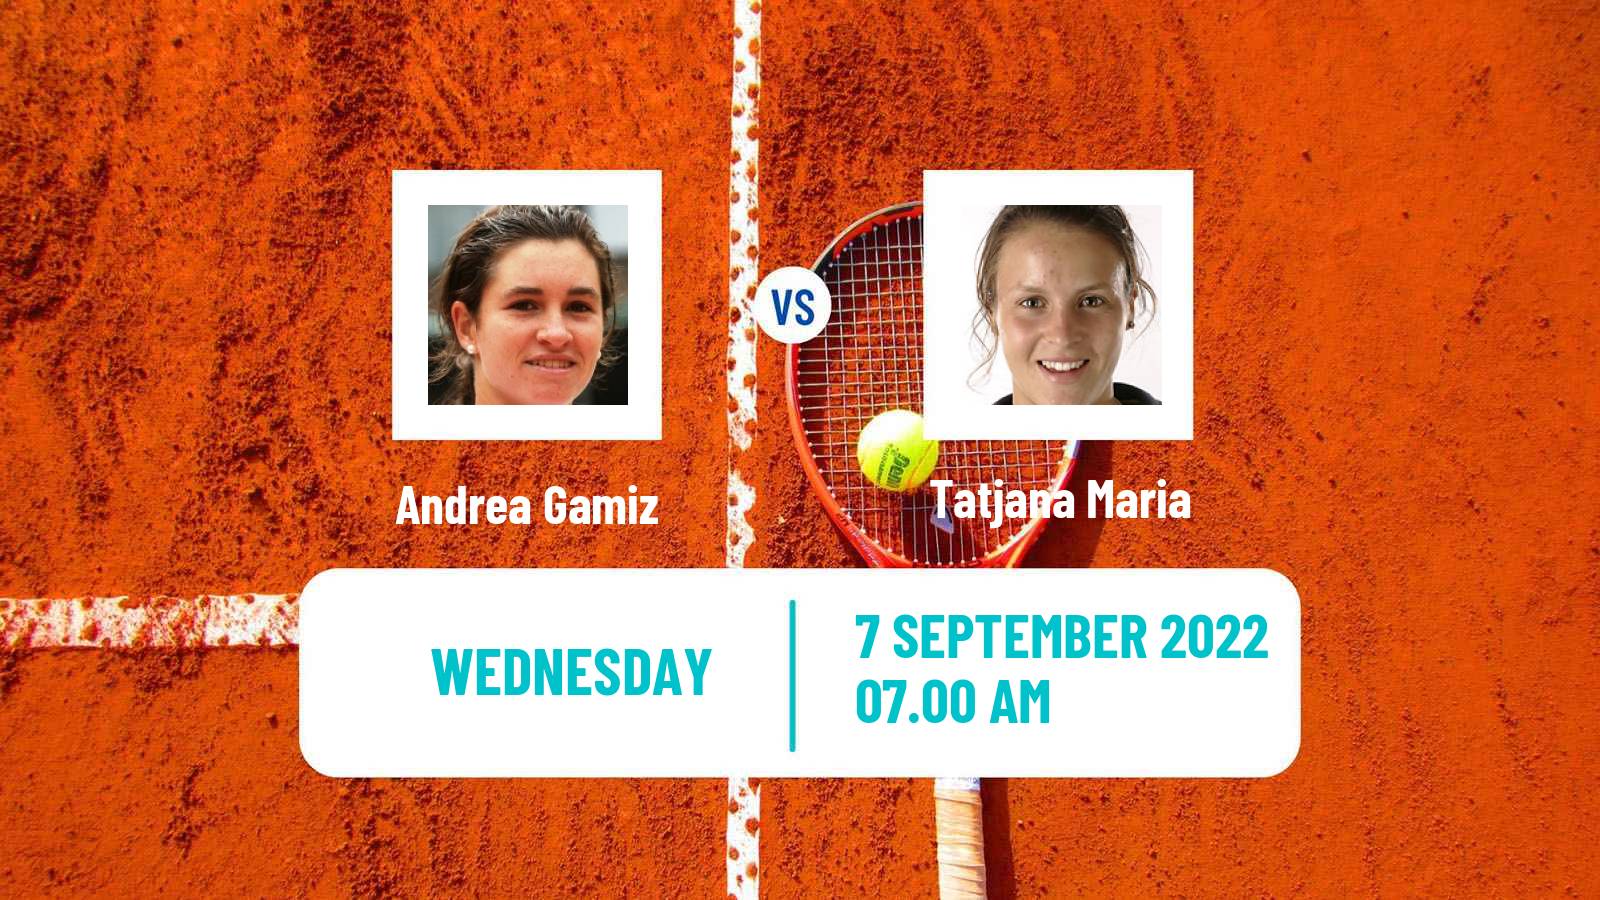 Tennis ATP Challenger Andrea Gamiz - Tatjana Maria